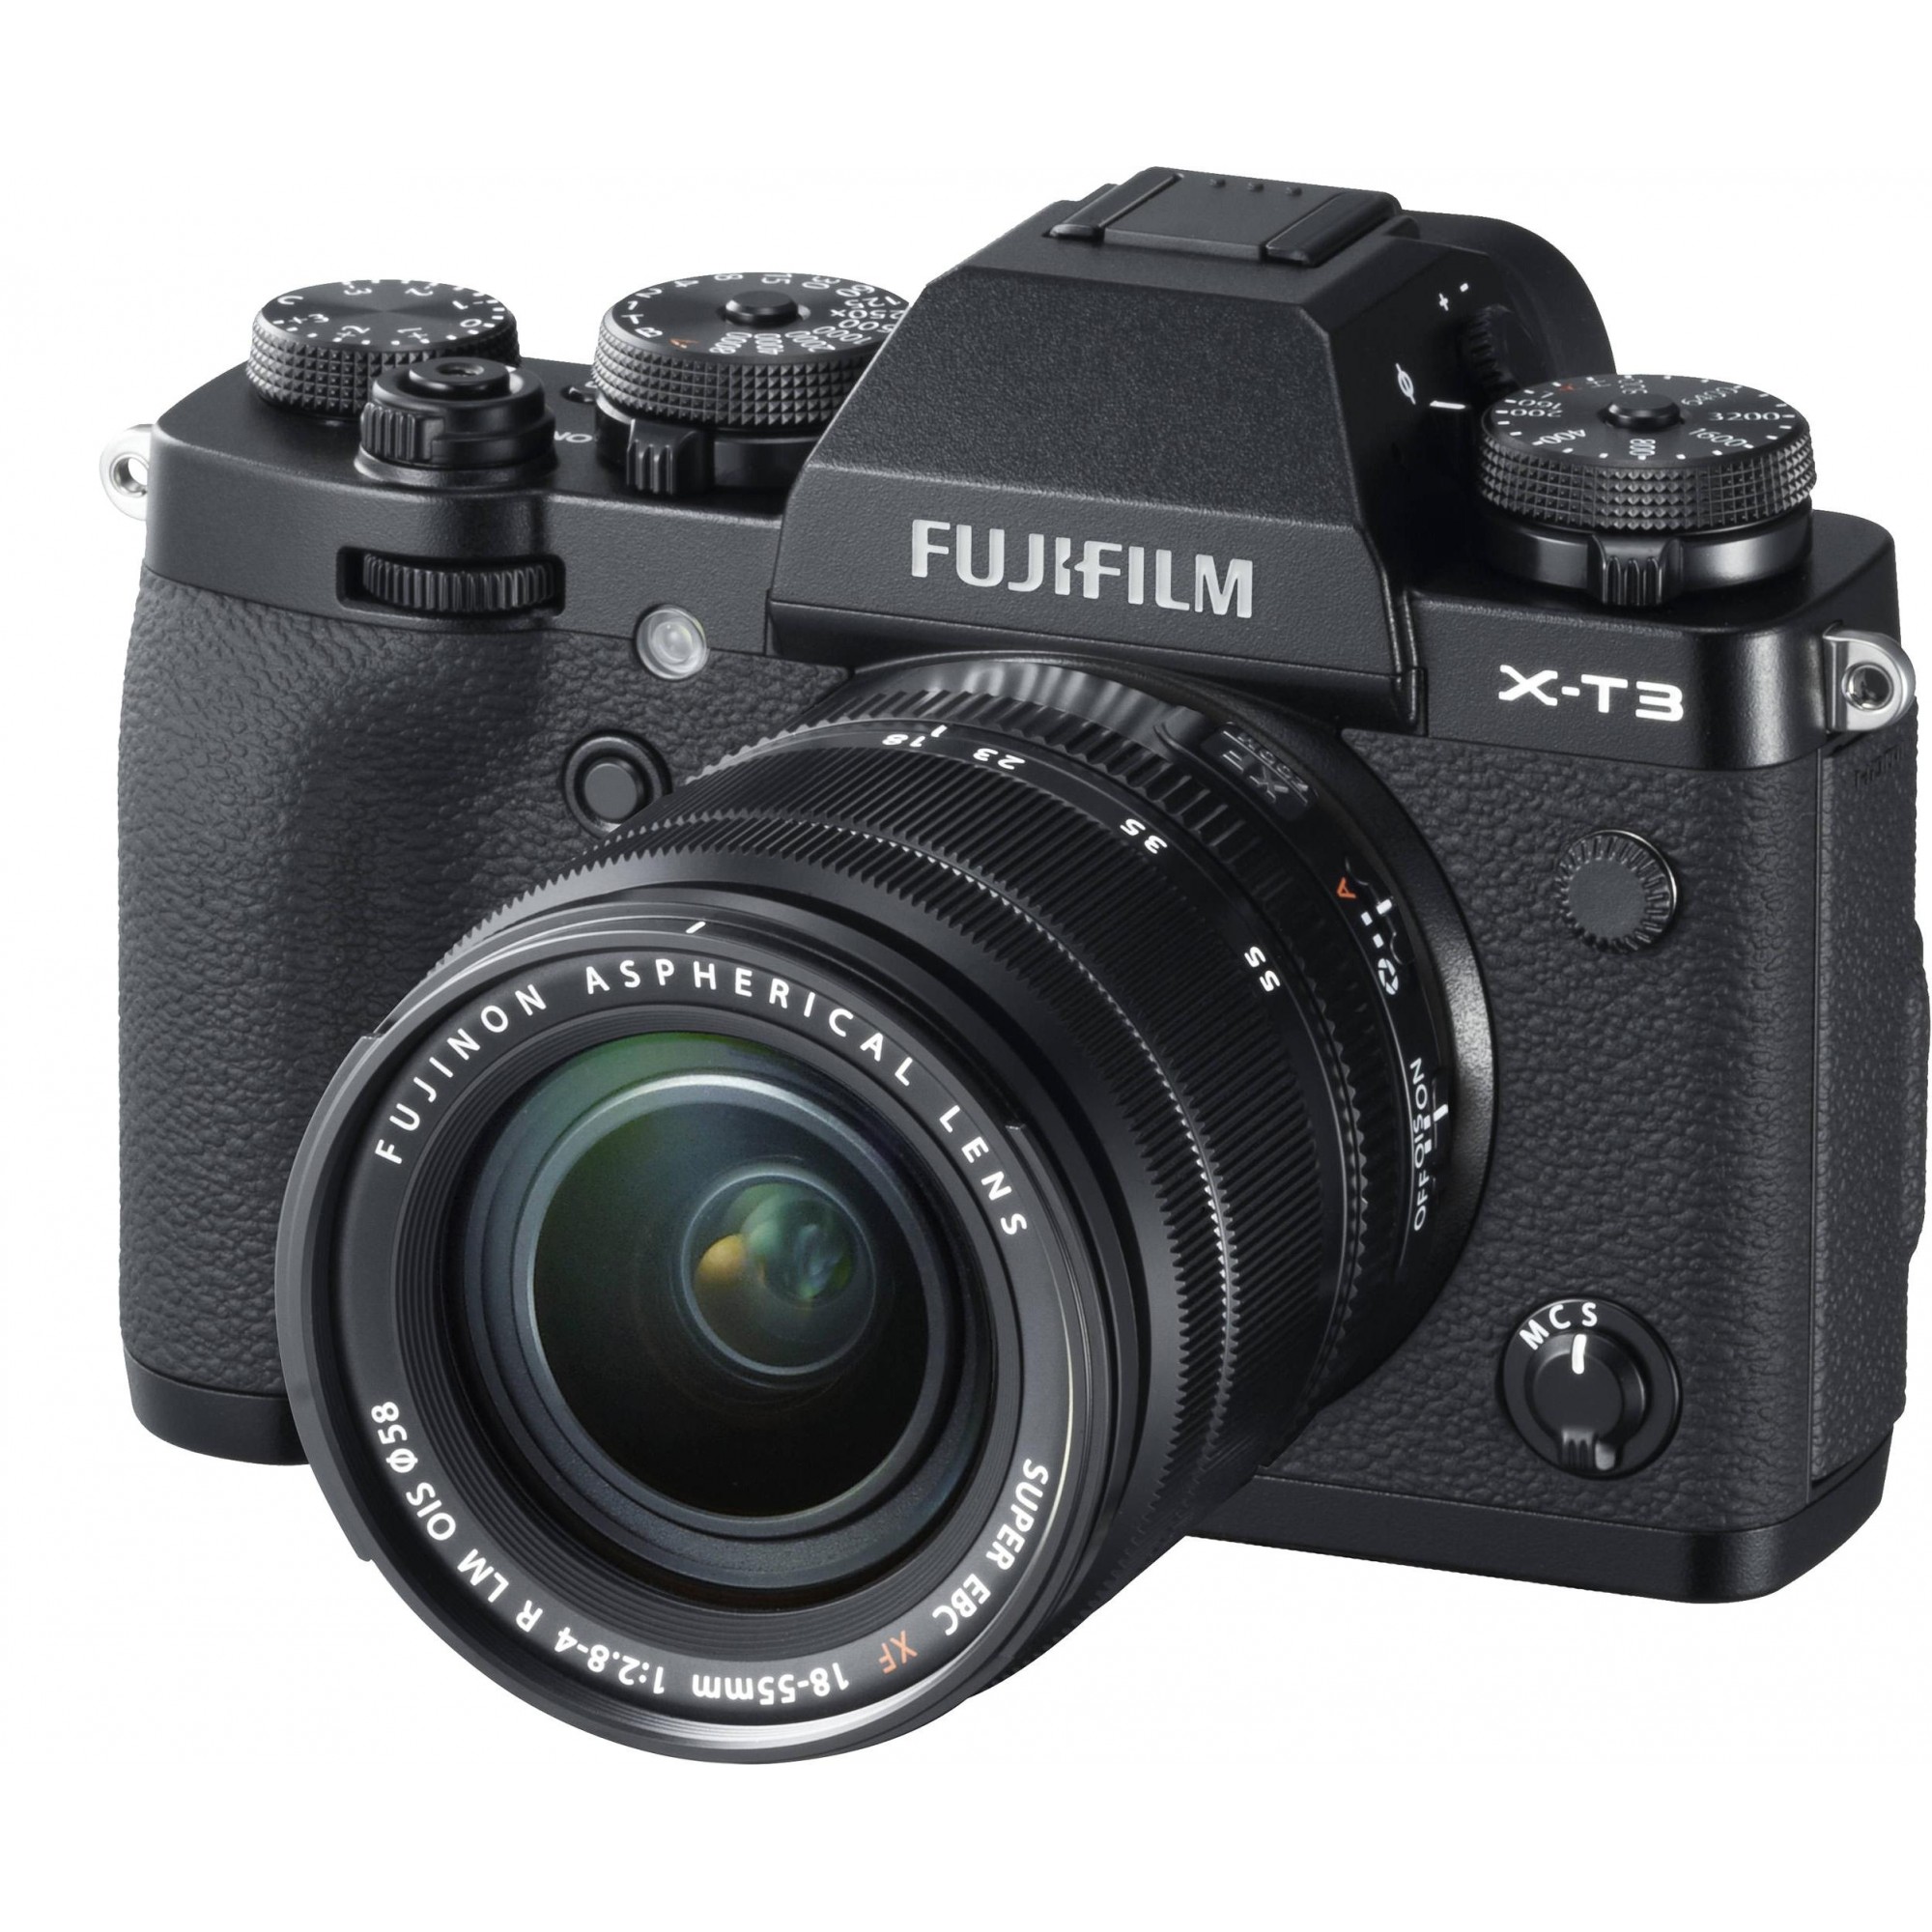 Fujifilm X-T3 kit (18-55mm) black (16588705) - зображення 1